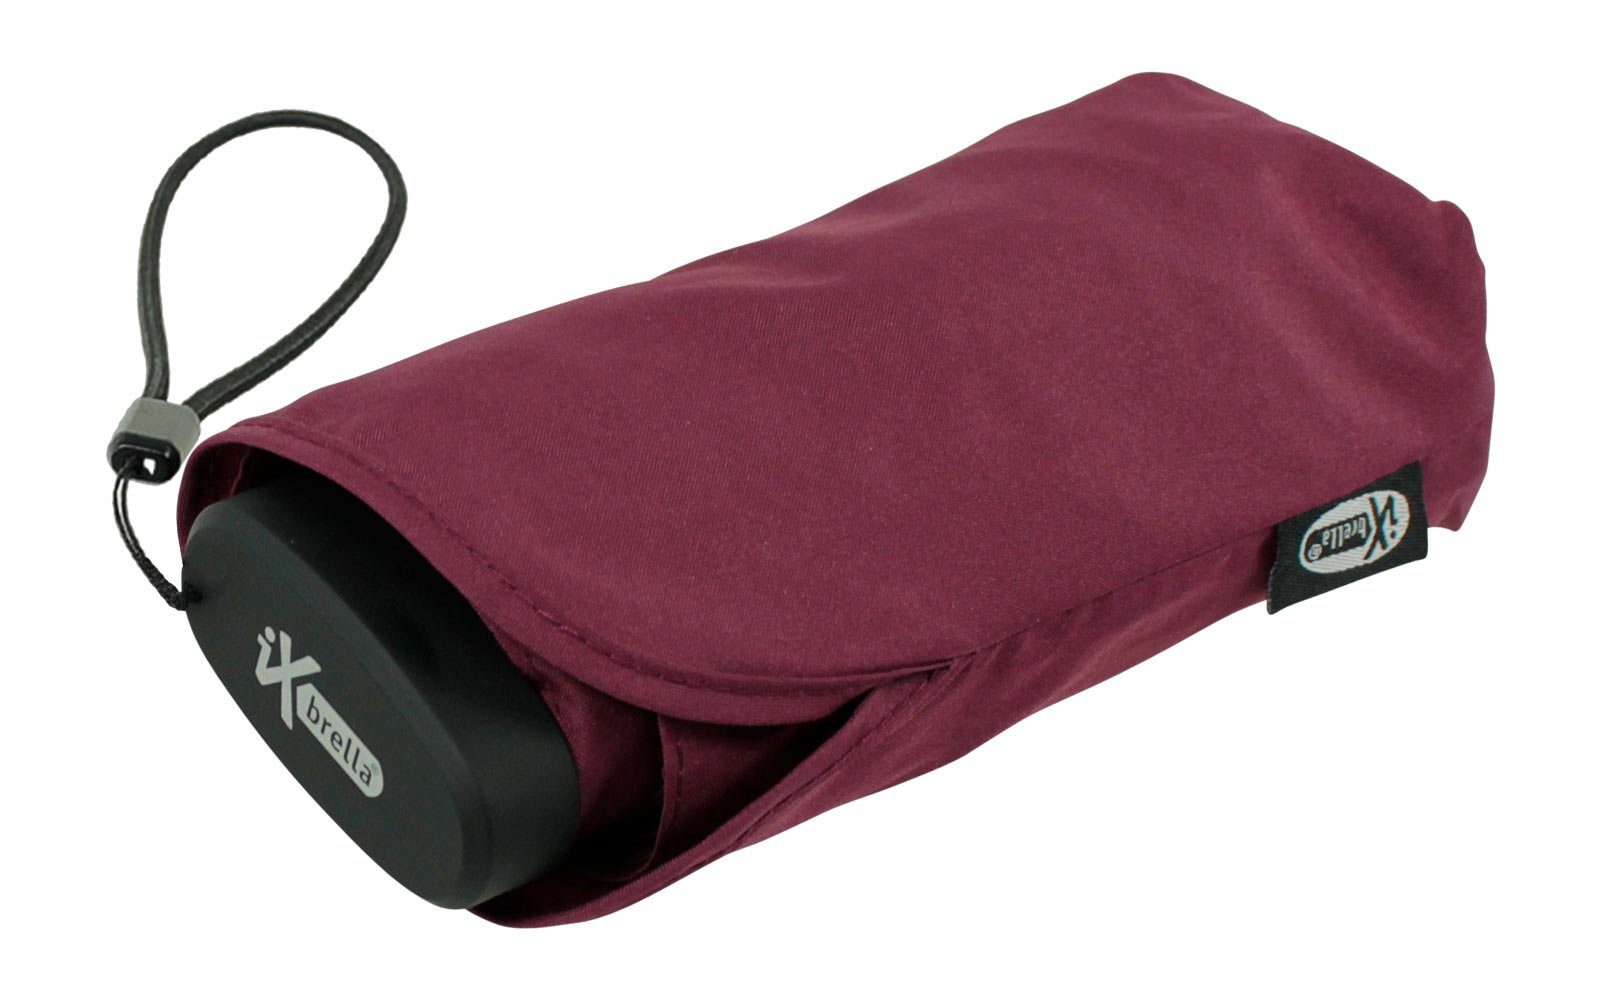 Ultra Taschenregenschirm ultra-klein Schirm iX-brella cm 15 bordeaux Mini Format, winziger Handy im